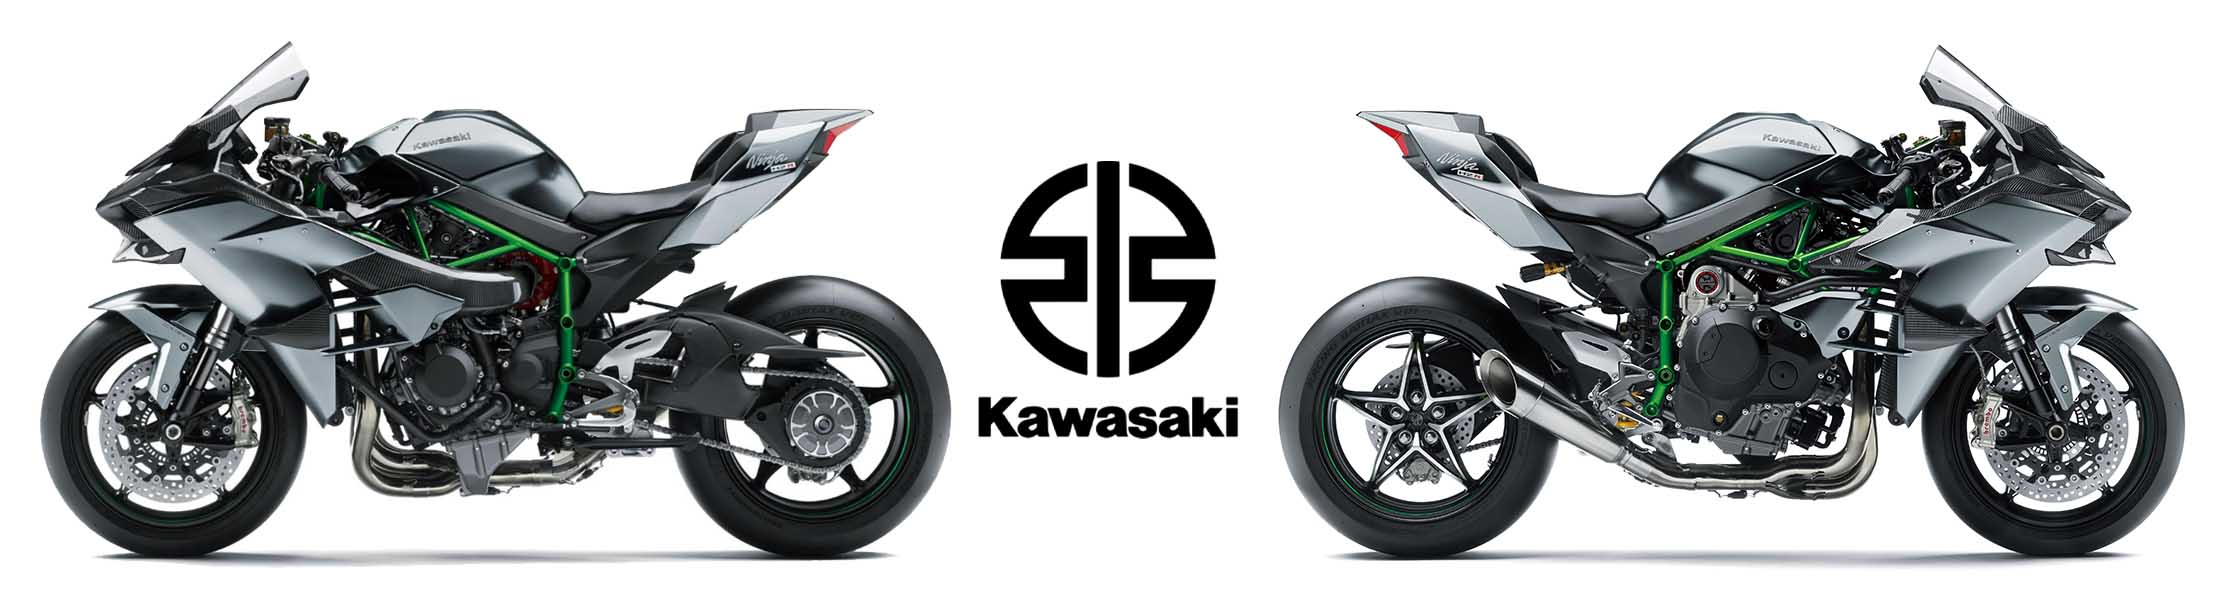 The H2R lineup next to the Kawasaki new logo